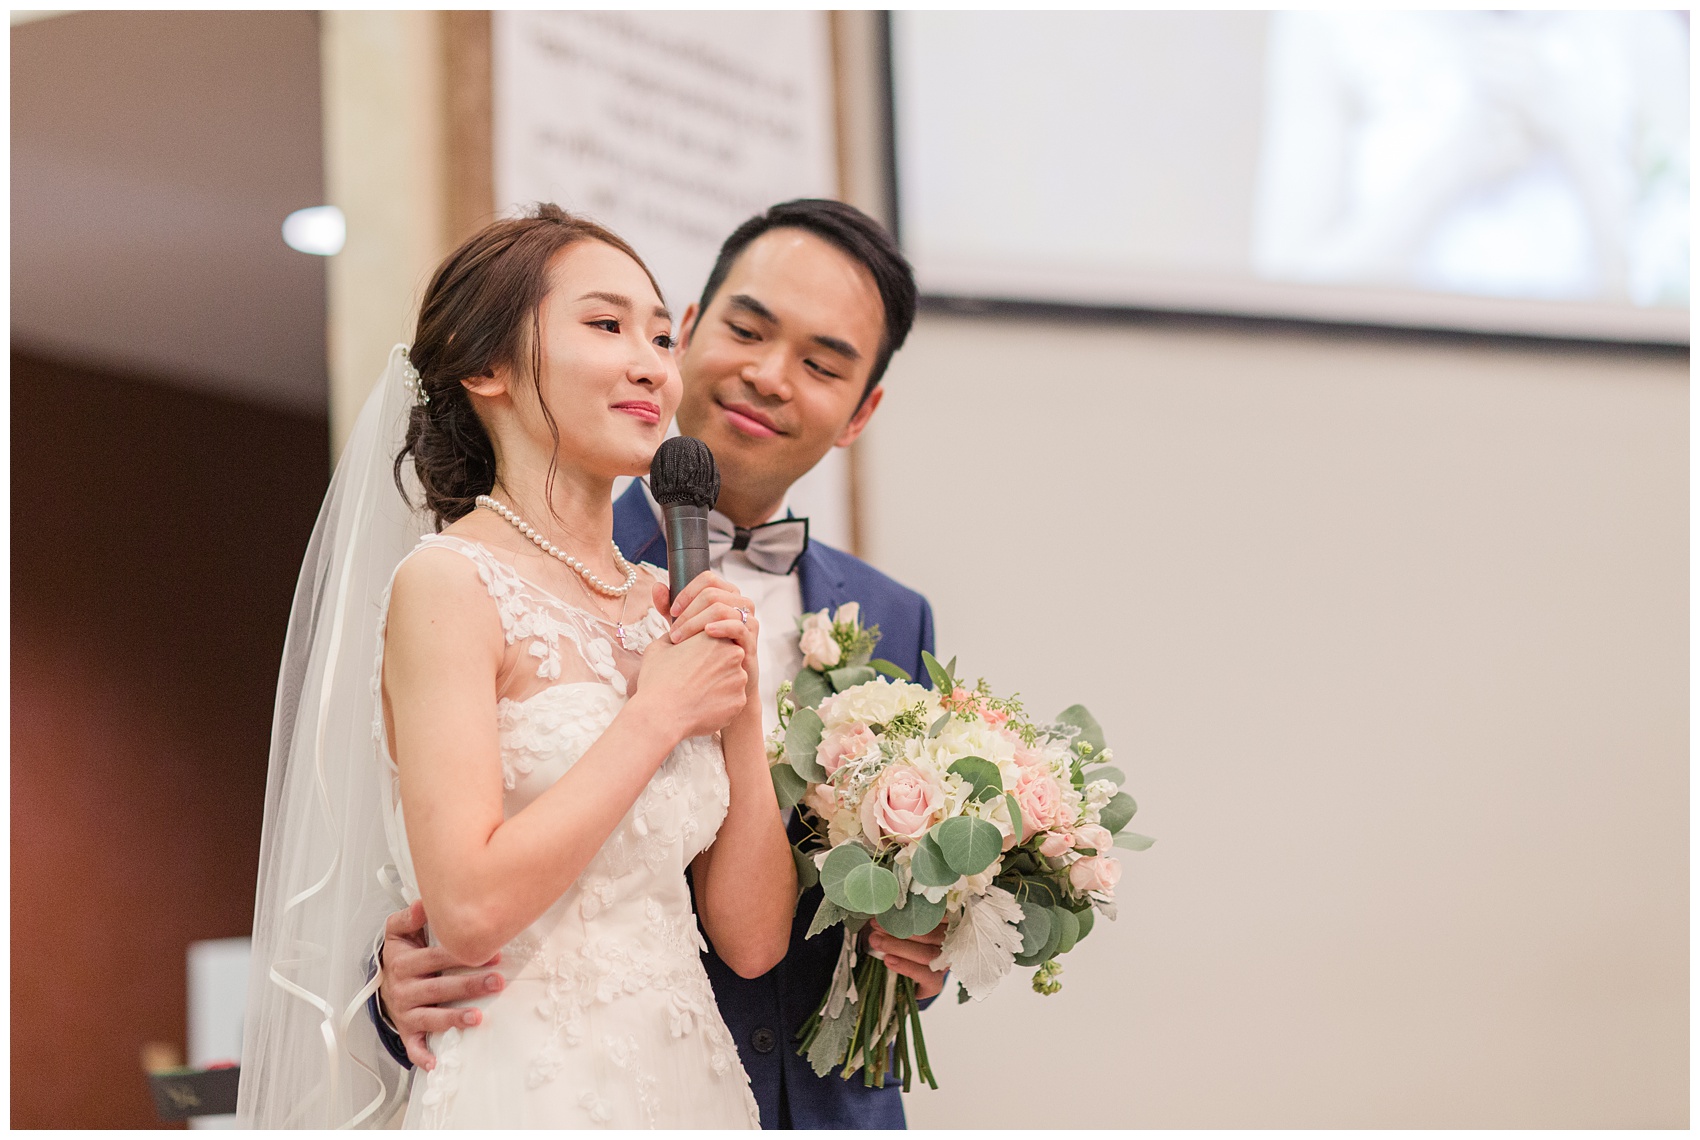 Burnaby Alliance Church wedding bride and groom speech, bride is emotional